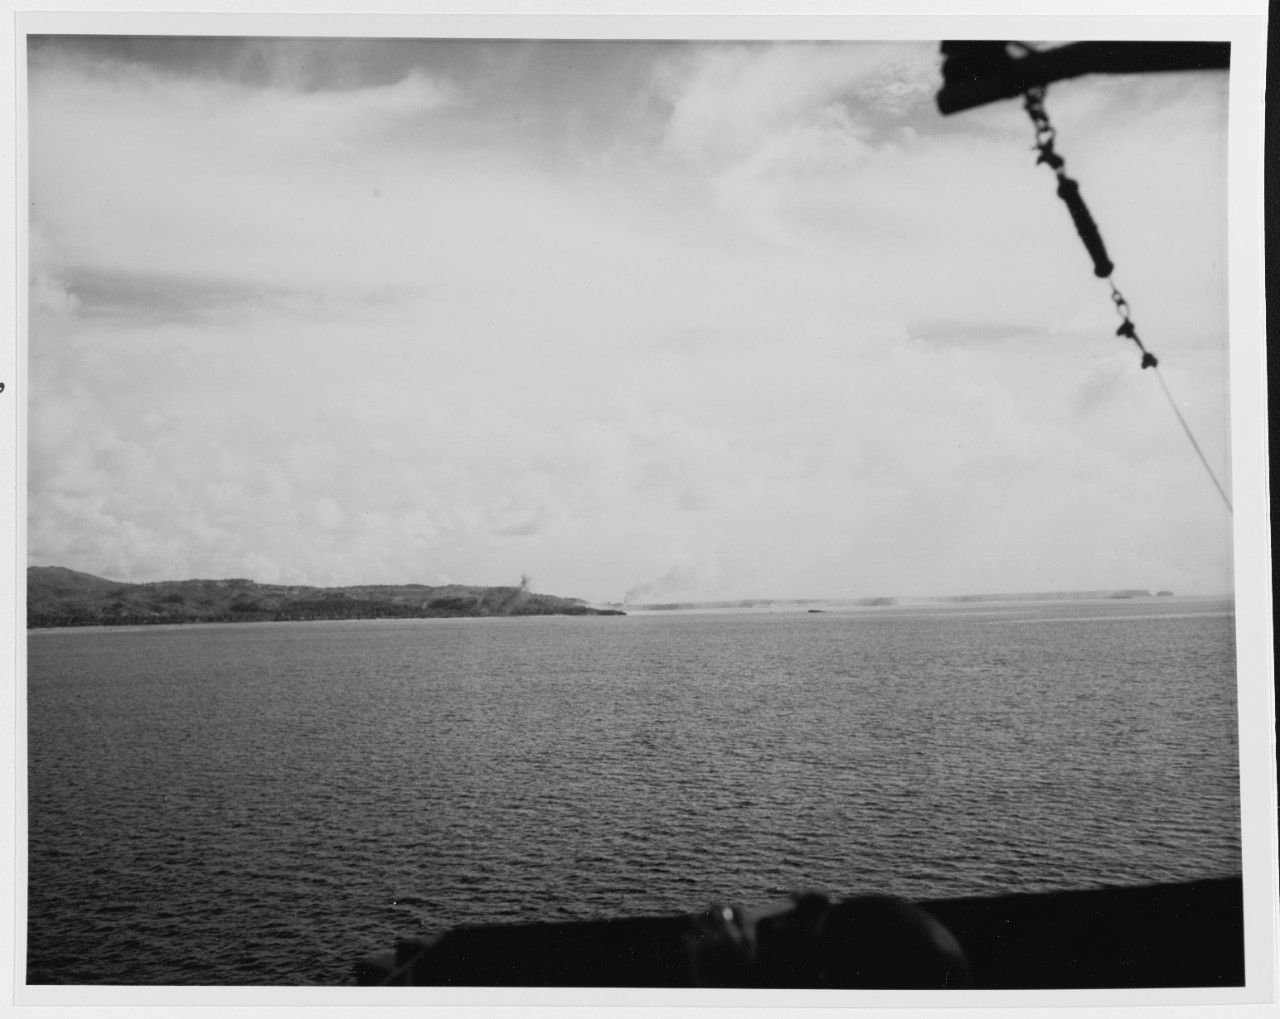 Guam Invasion, July 1944